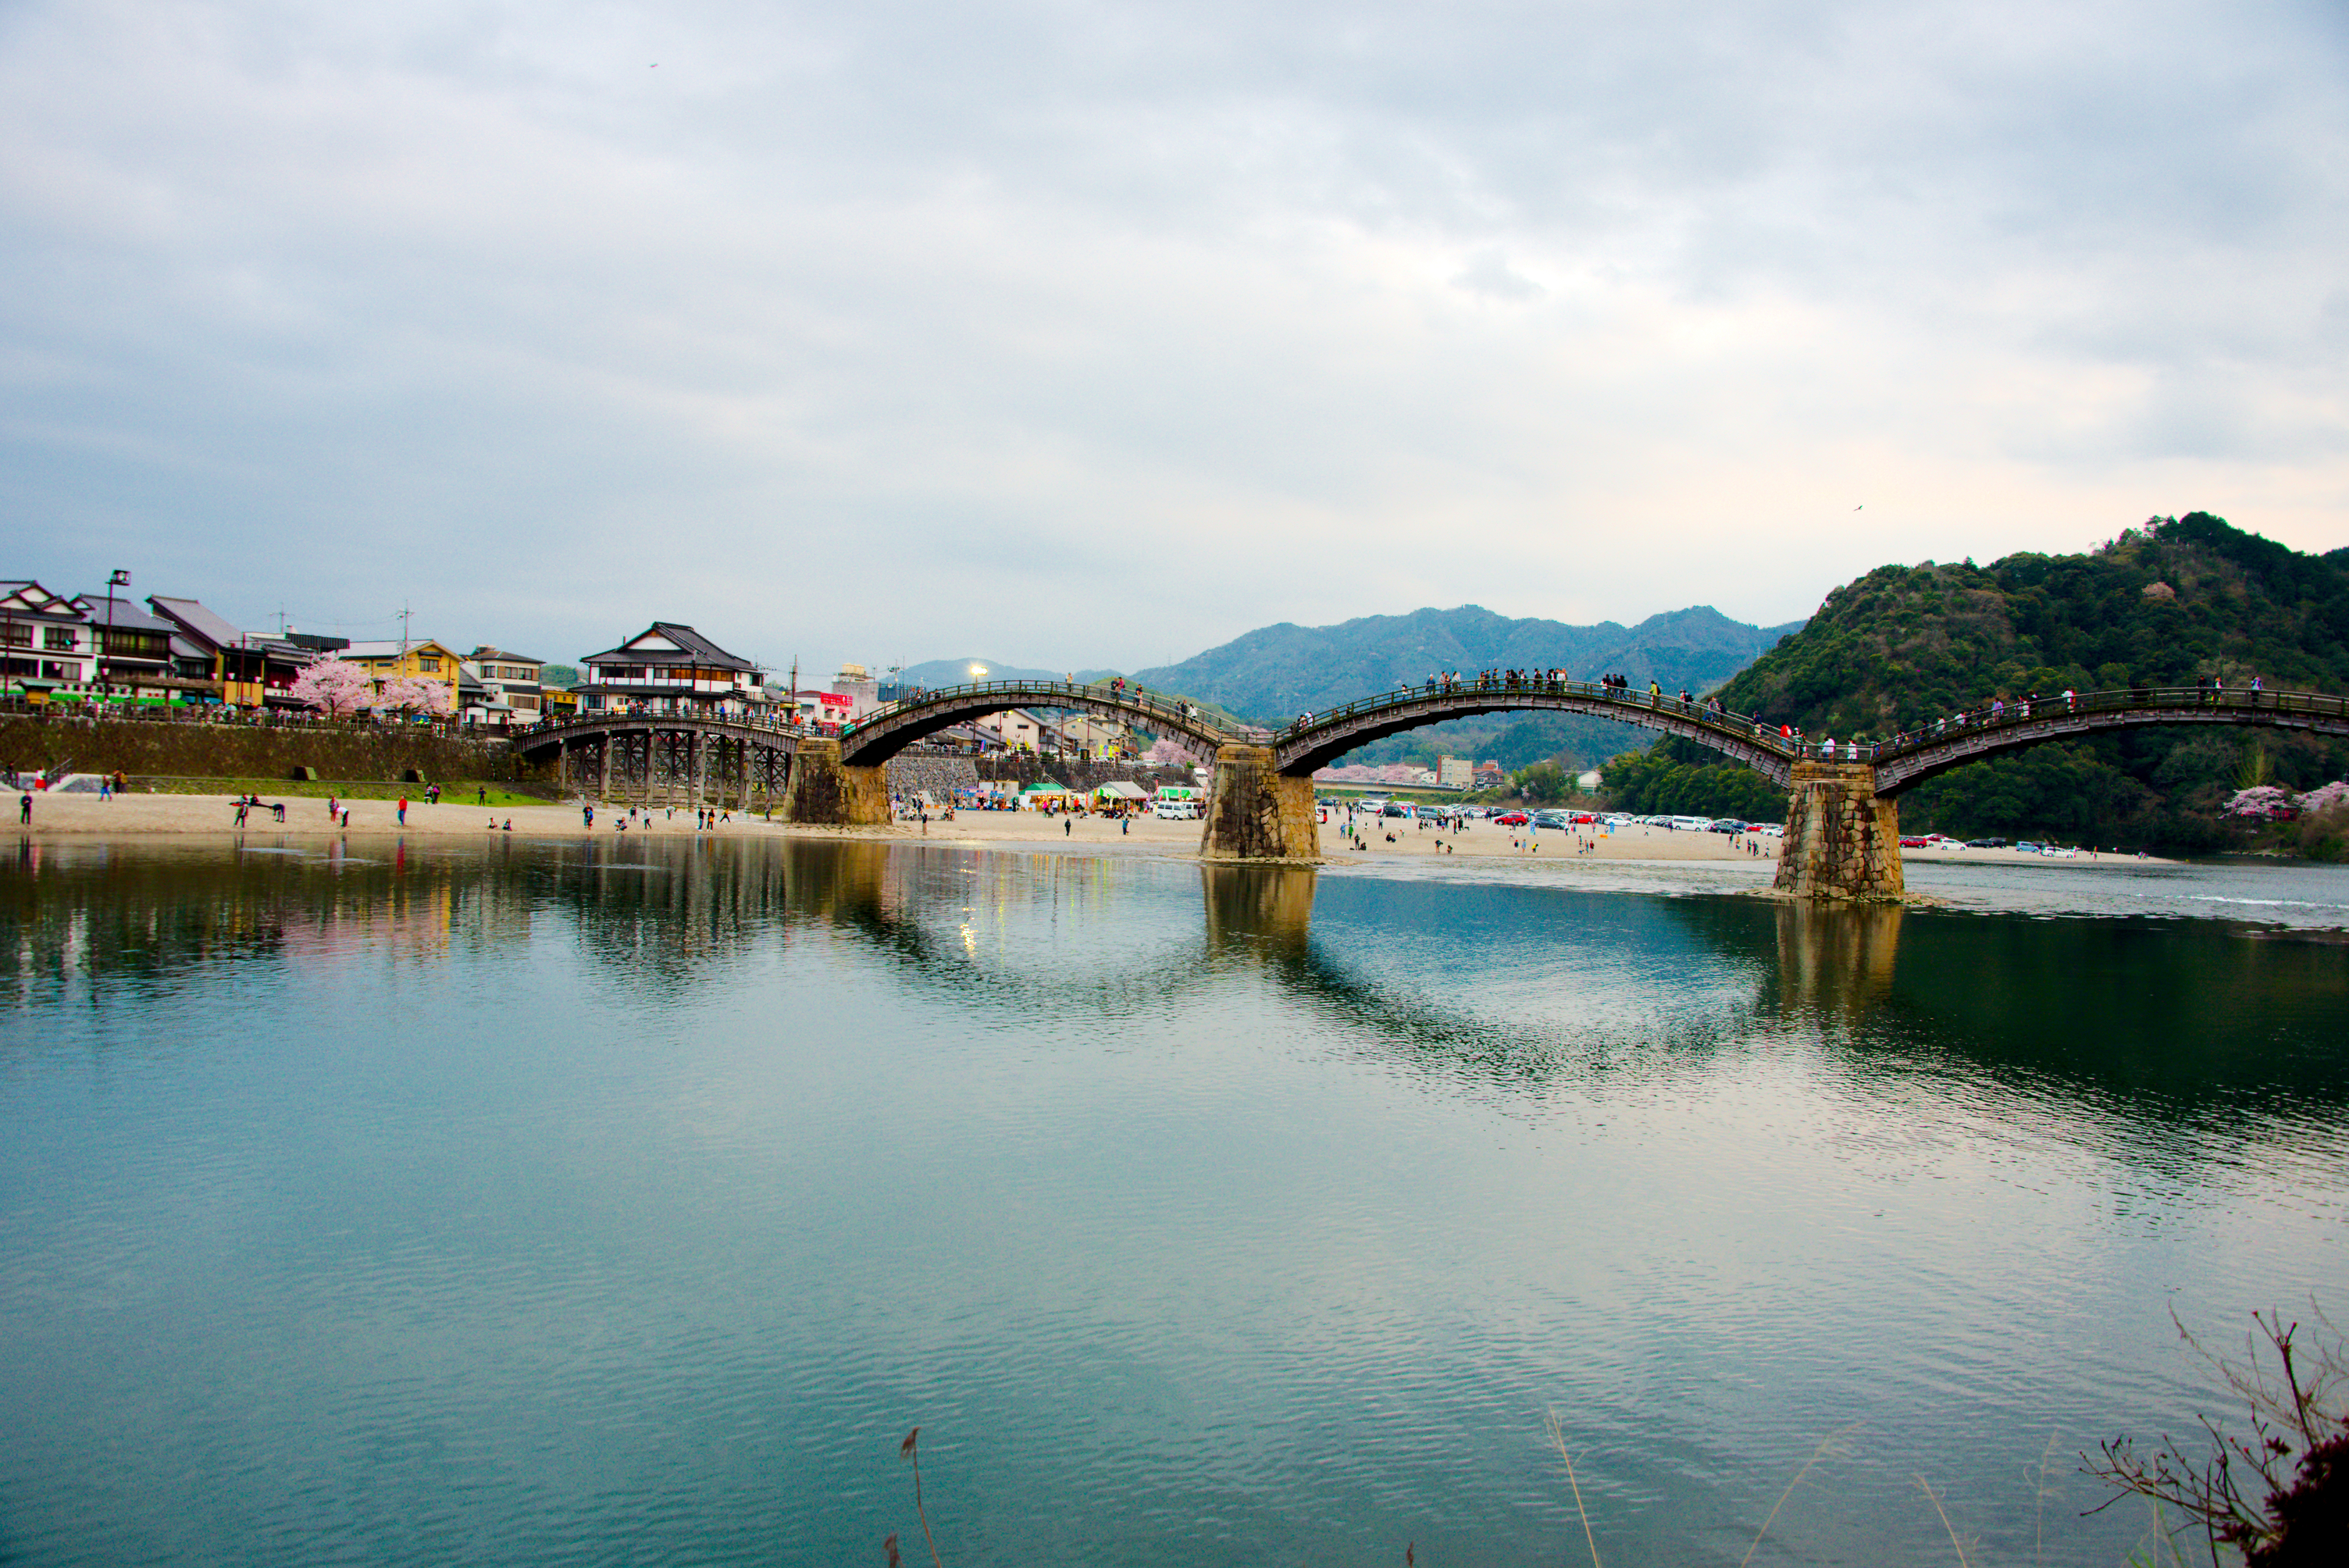 Kintai Bridge at Iwakuni in Yamaguchi Prefecture